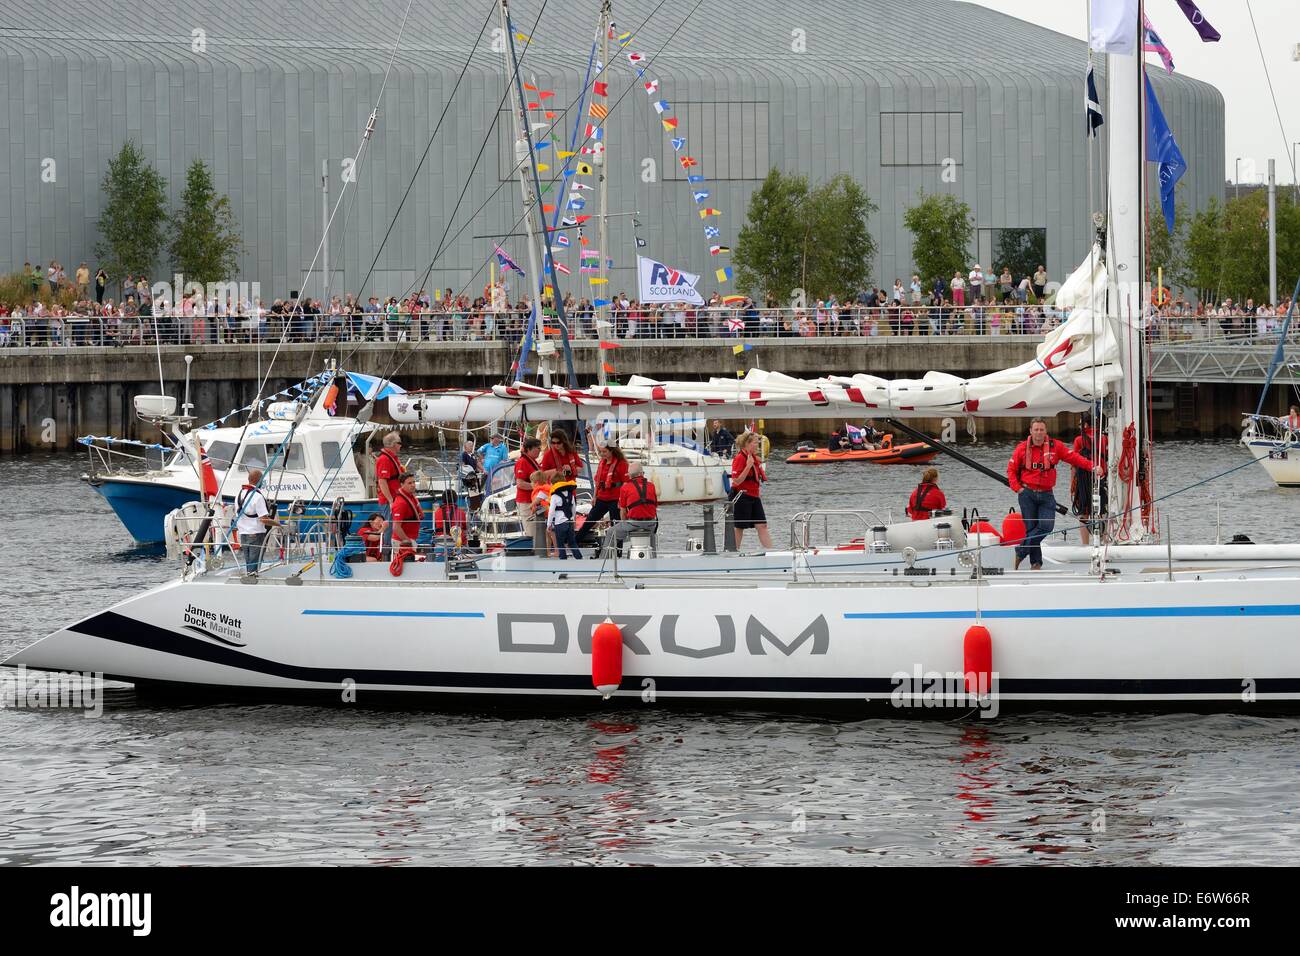 La "rum" racing yacht al Commonwealth Games flottiglia in Glasgow Foto Stock